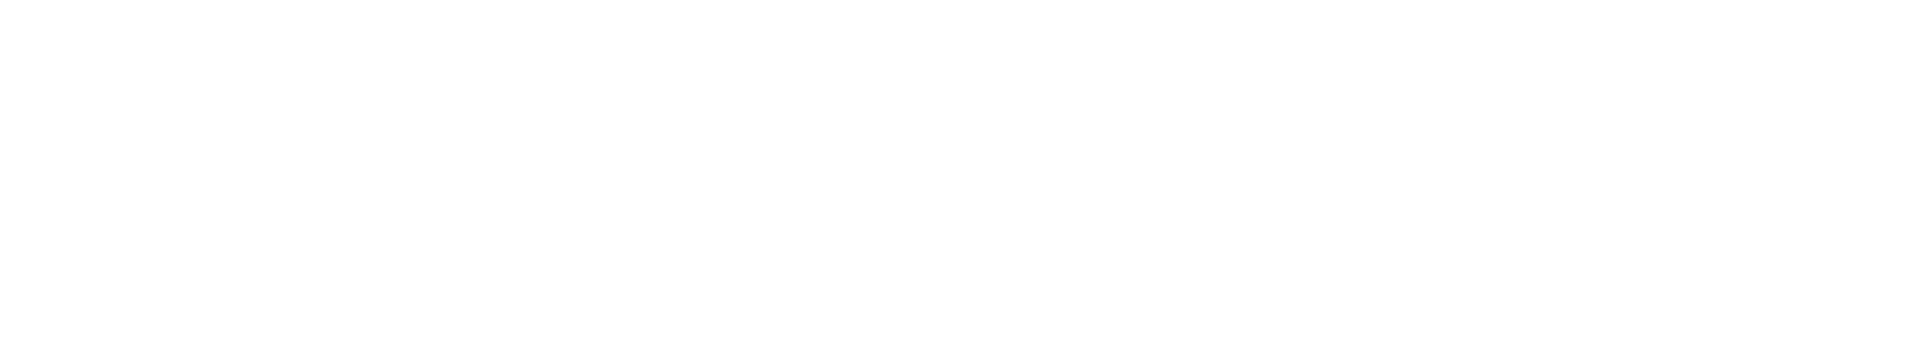 Pin Payments white logo